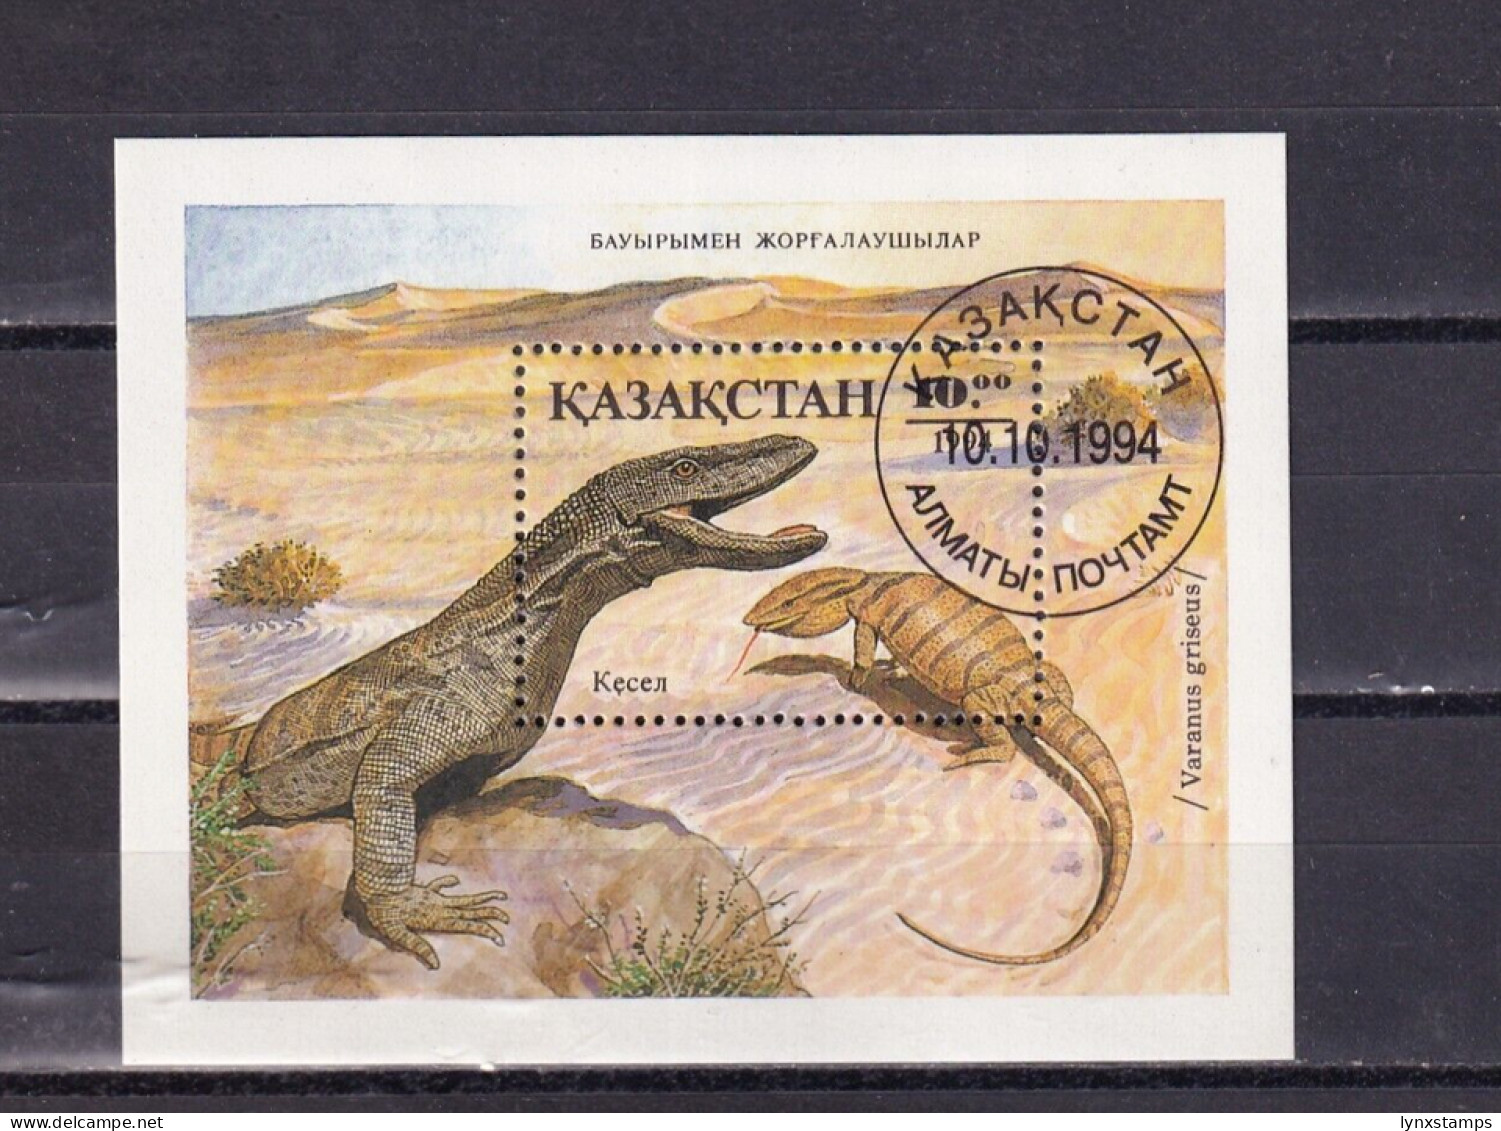 SA03 Kazakhstan 1994 Reptiles Used Minisheet - Kazachstan